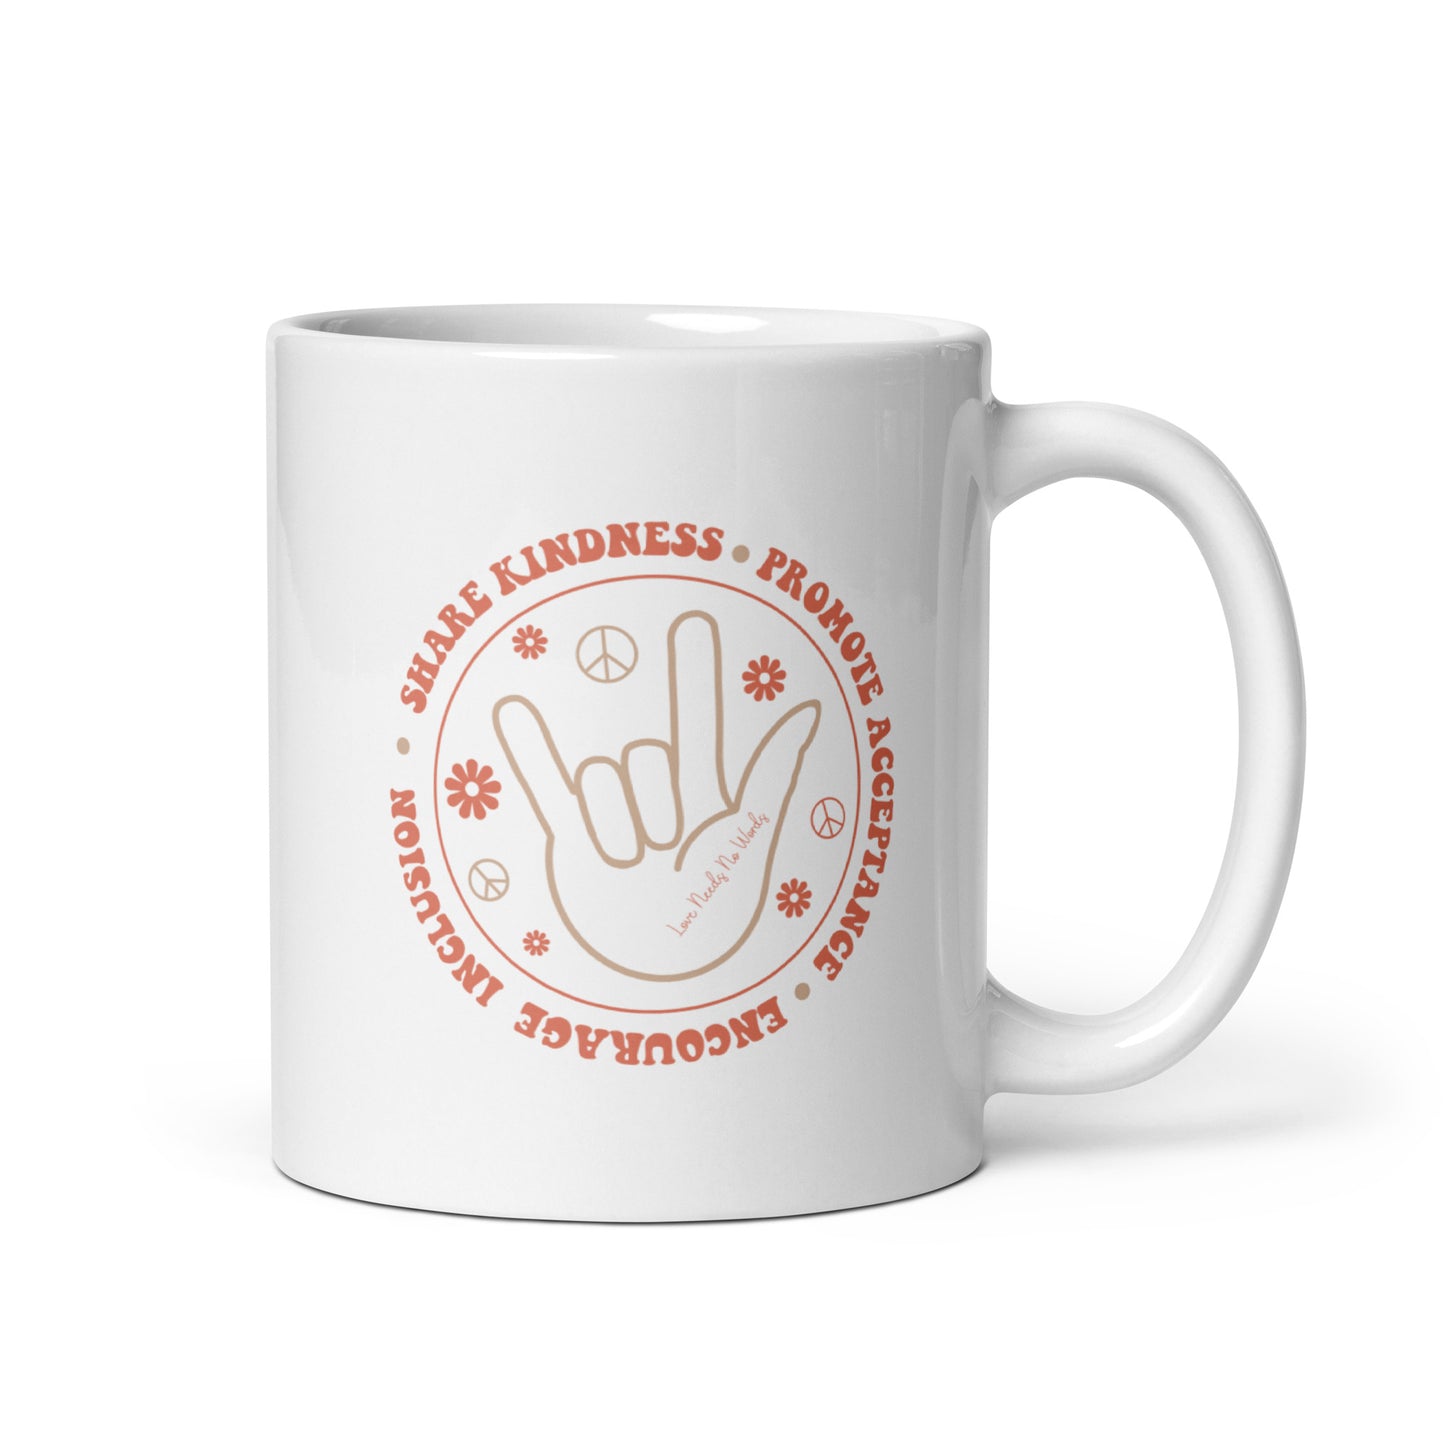 Kindness, Acceptance, Inclusion mug